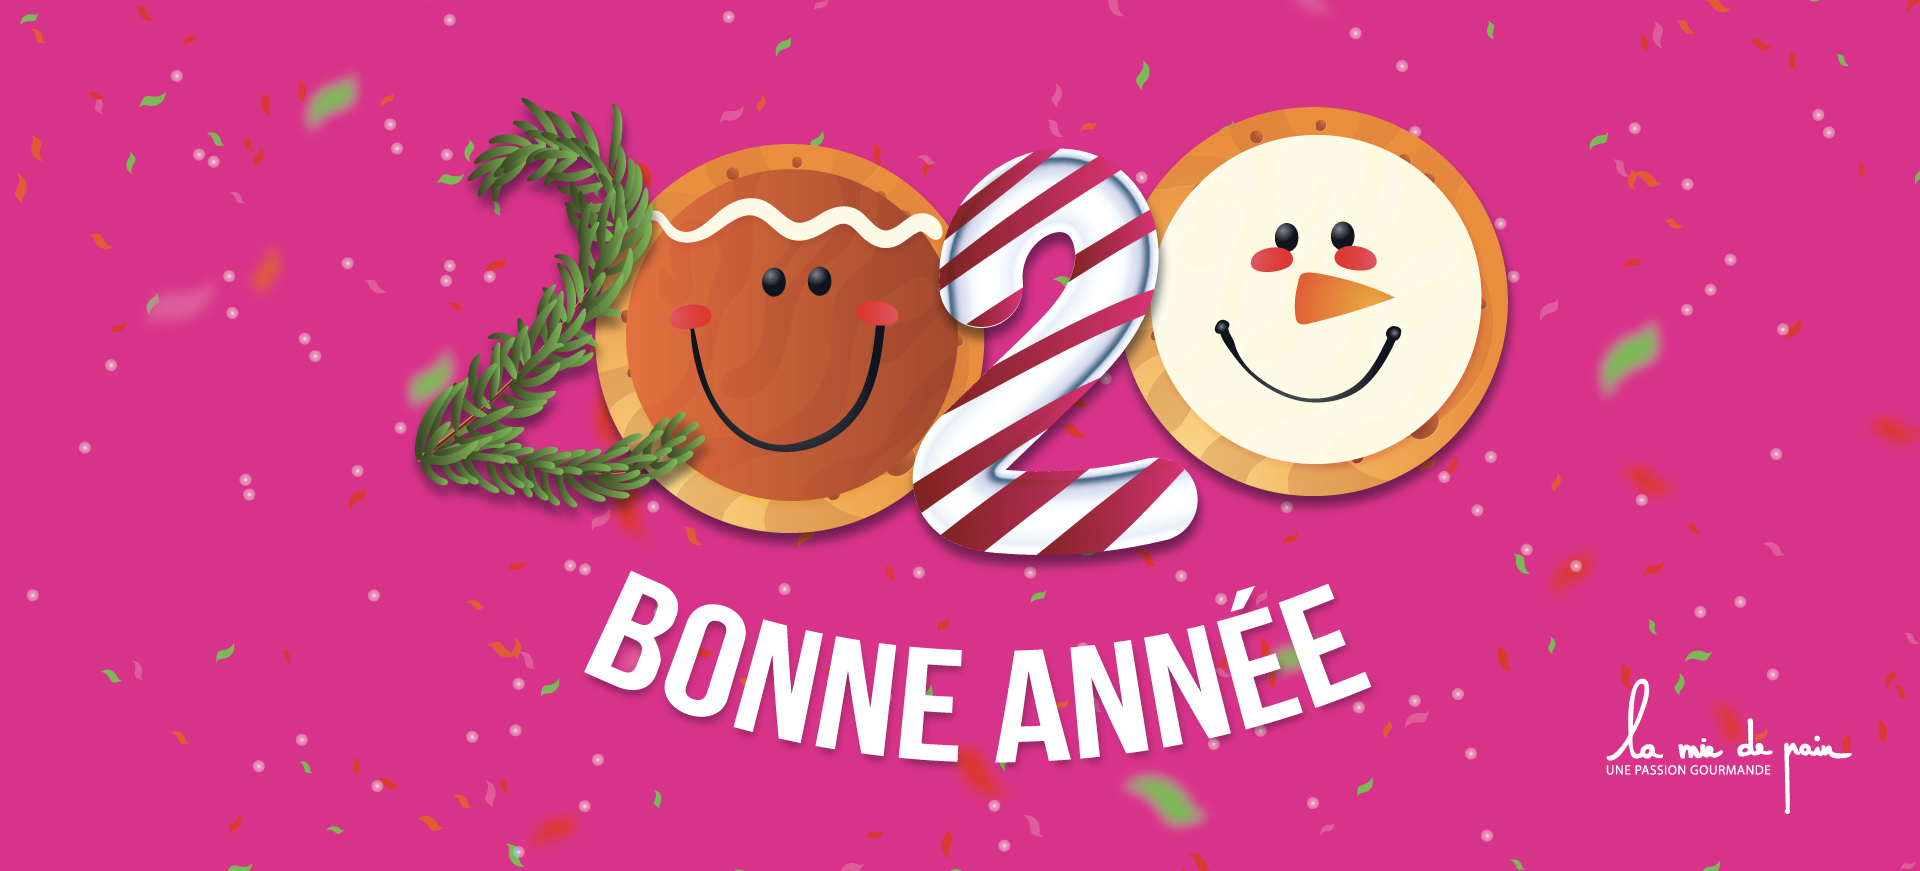 Bonne-année-2020-bonne-annee-lamiedepain-boulangerie-2020-1920x871px